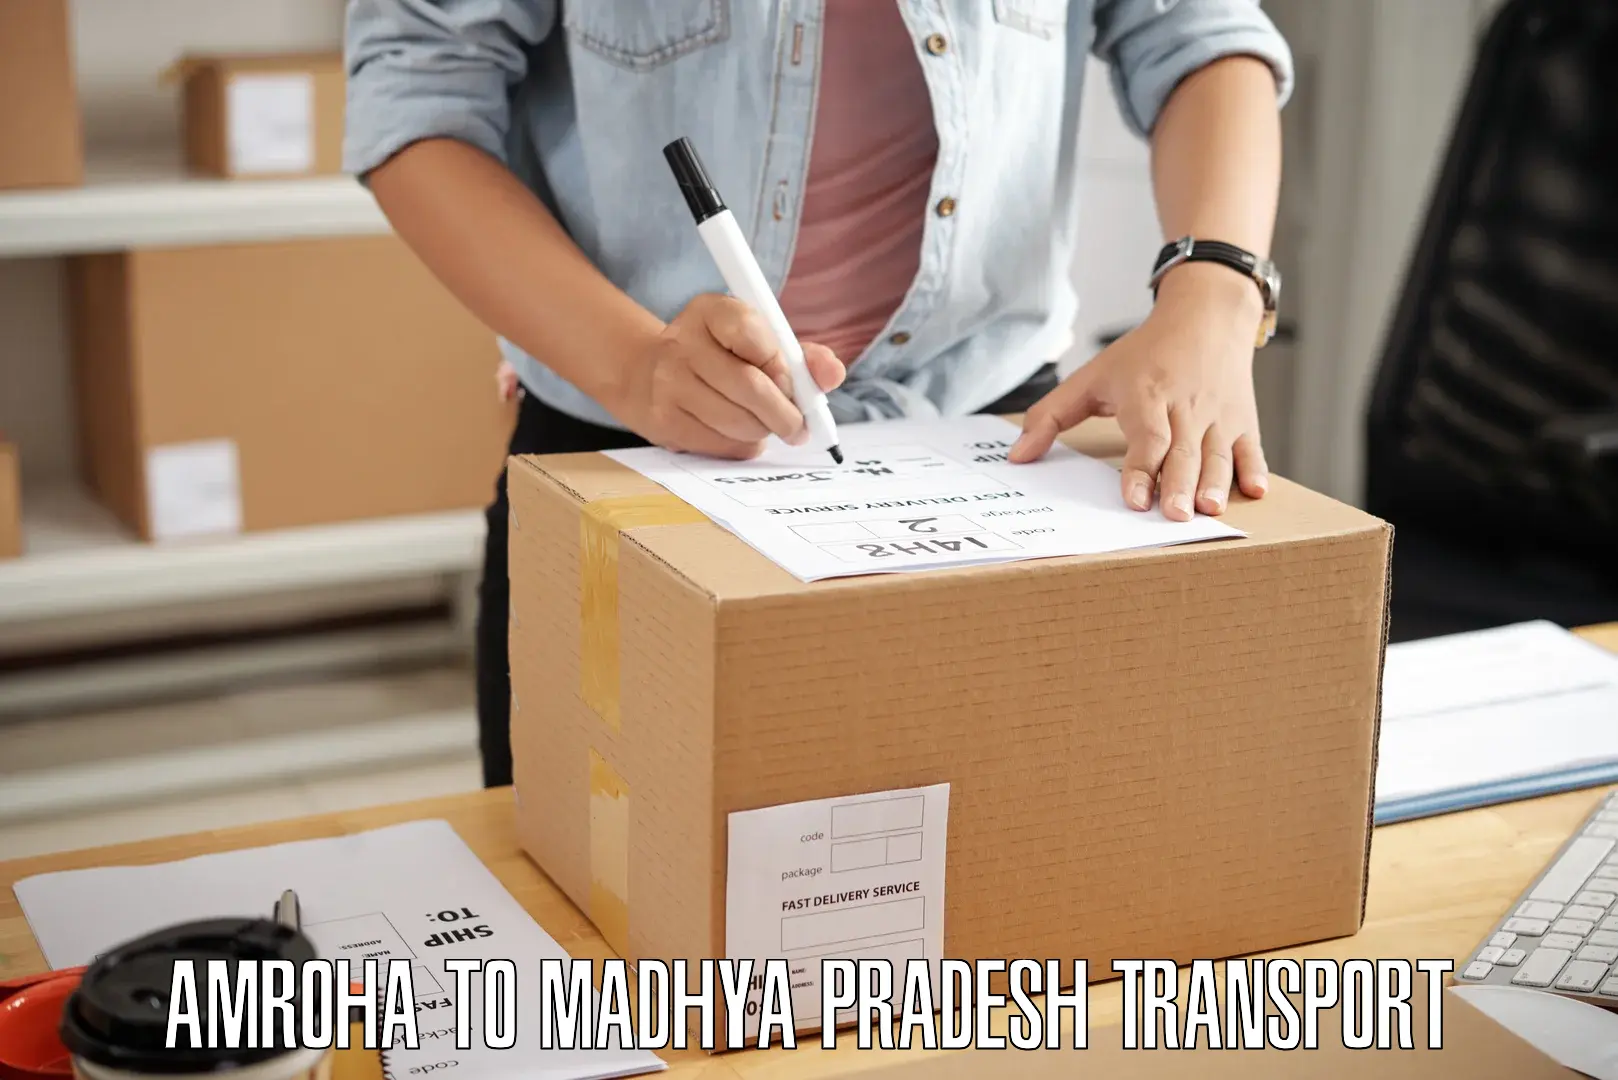 Transport in sharing Amroha to Nagda